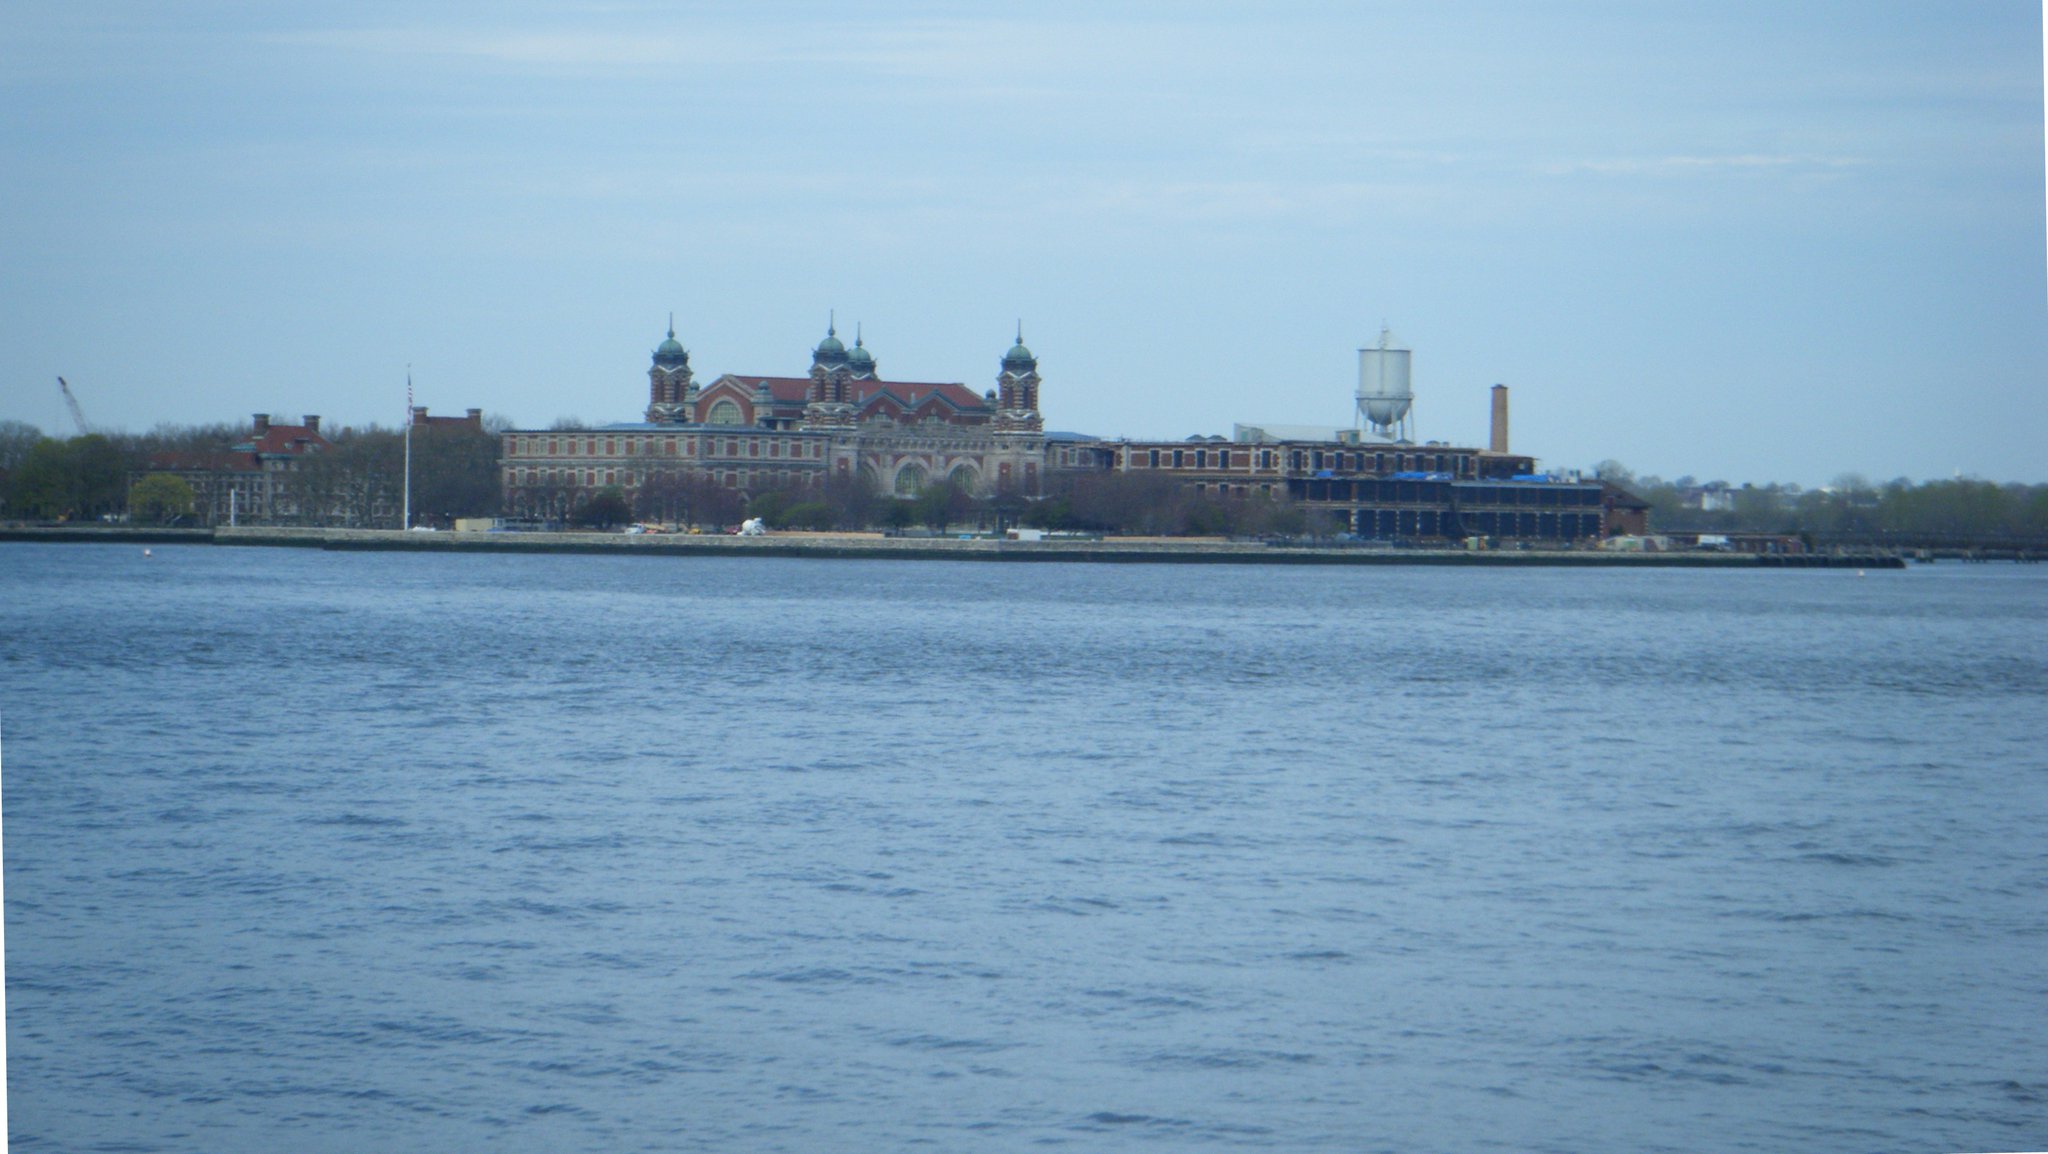 Ellis Island, New York